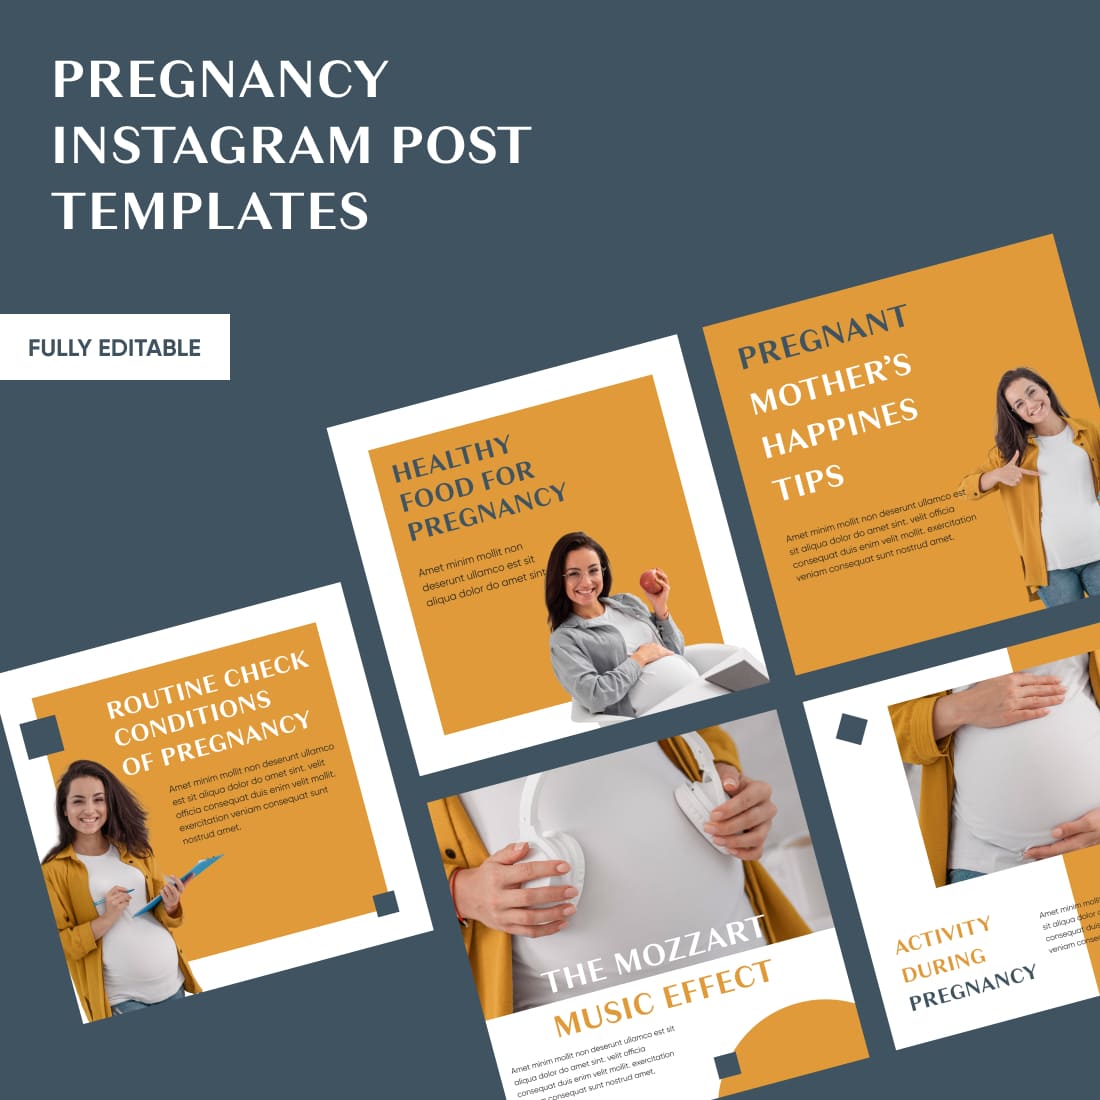 5 pregnancy instagram post templates.